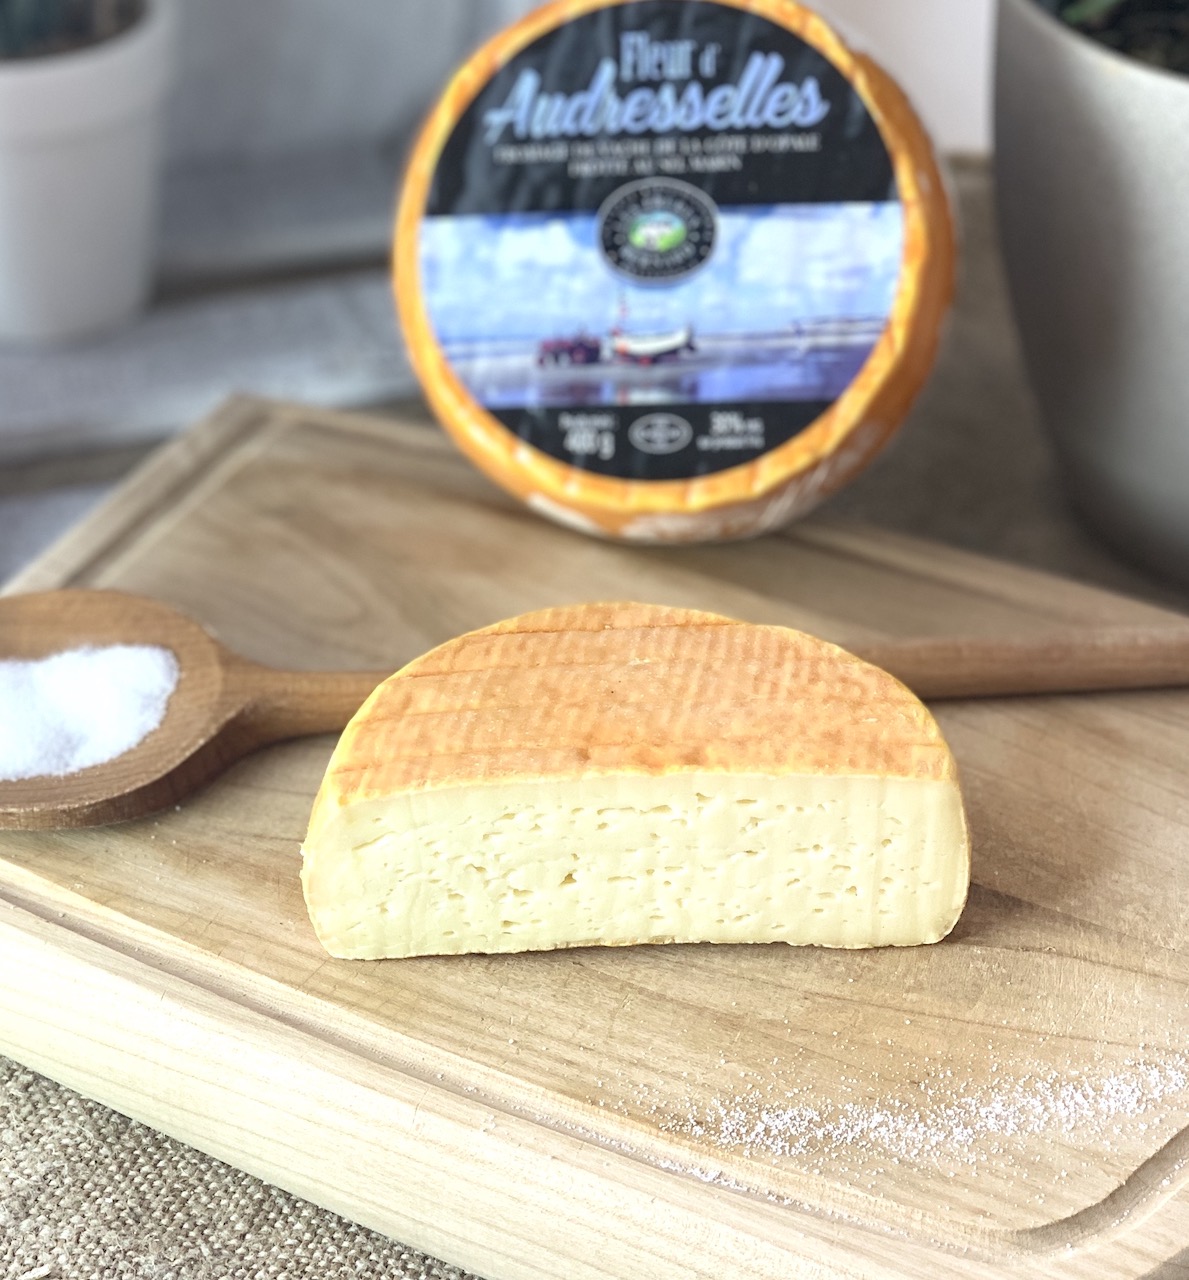 FLEUR D'AUDRESSELLES - Französischer Rotkultur-Käse